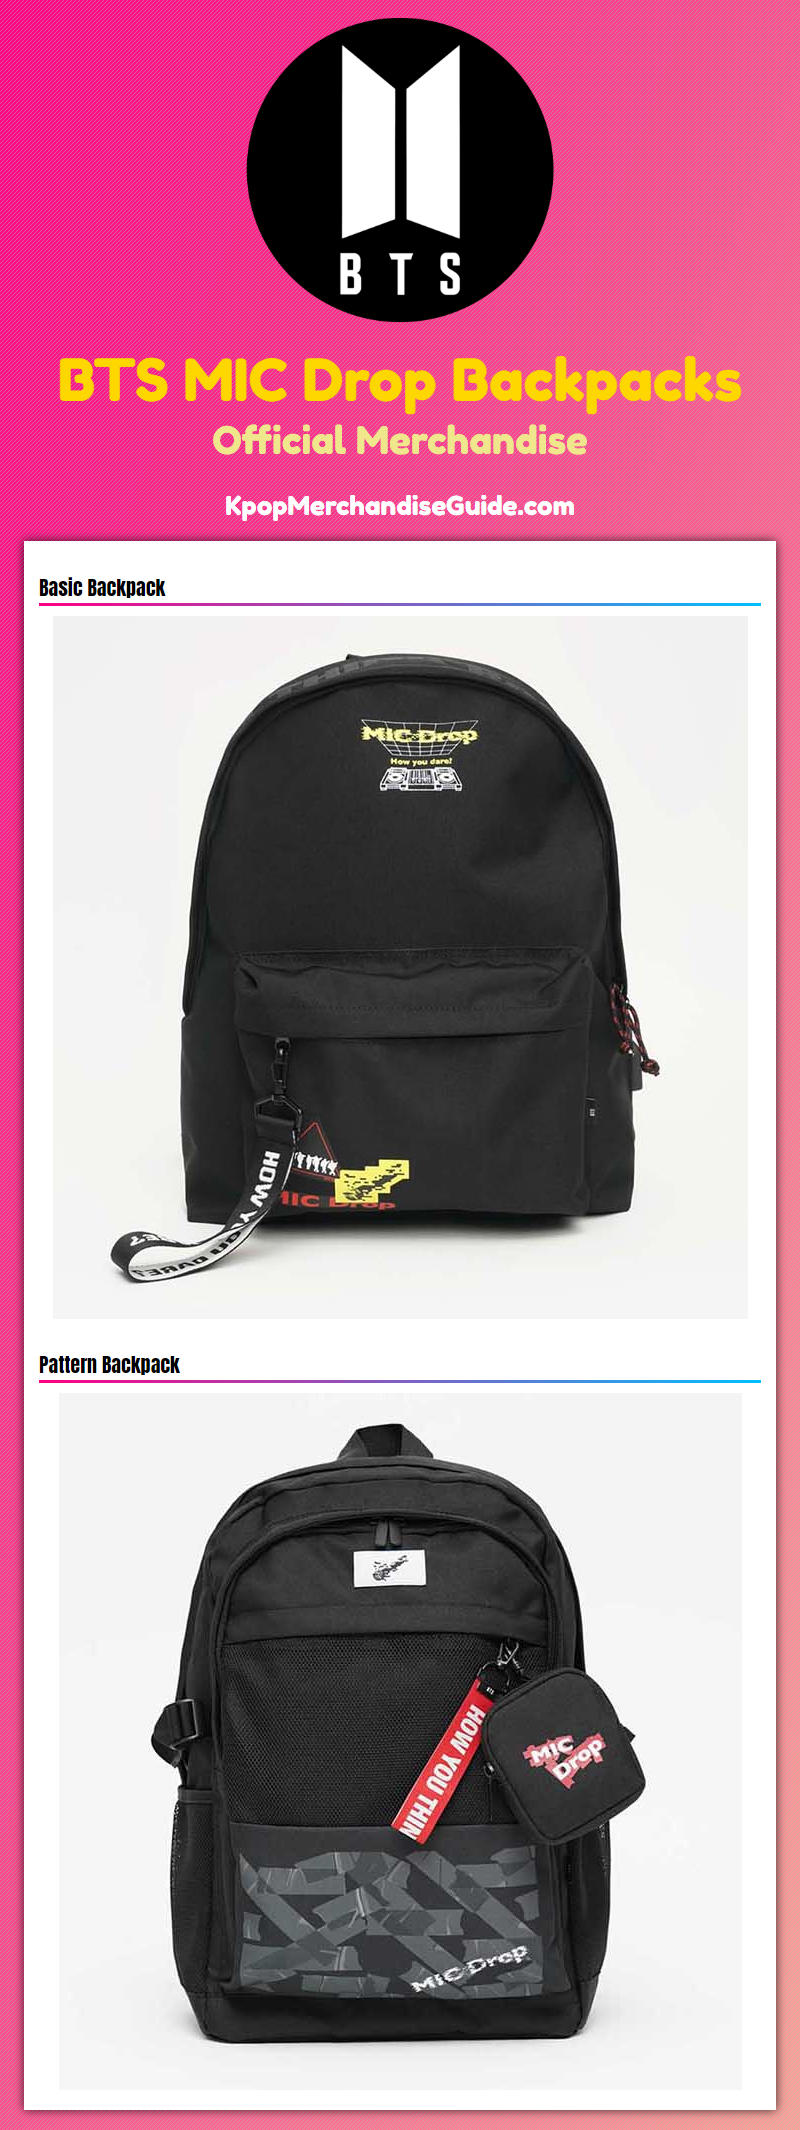 BTS Gifts - MIC Drop Backpacks